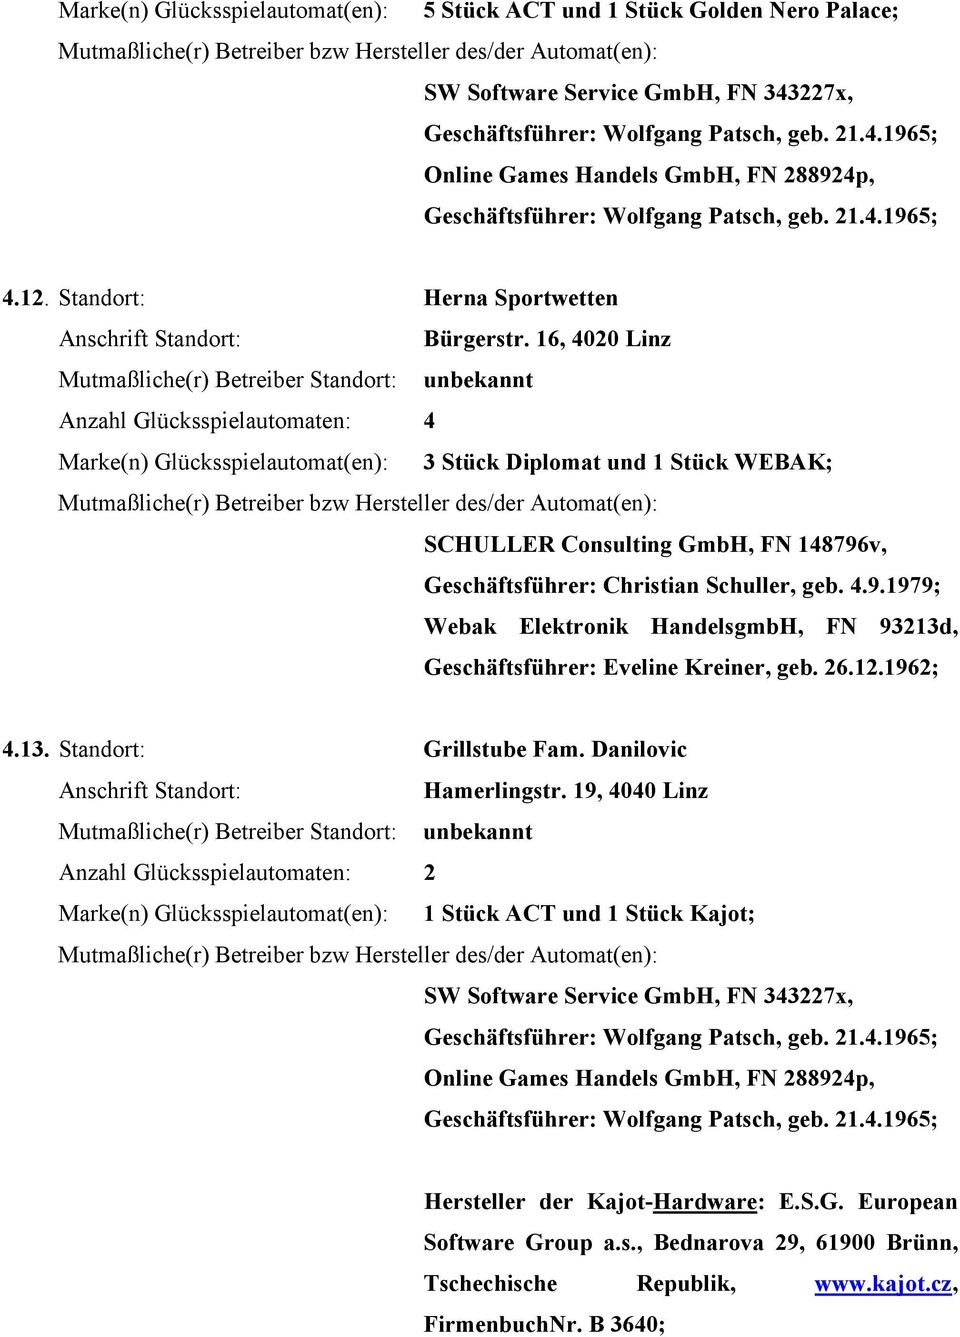 148796v, Geschäftsführer: Christian Schuller, geb. 4.9.1979; Webak Elektronik HandelsgmbH, FN 93213d, Geschäftsführer: Eveline Kreiner, geb. 26.